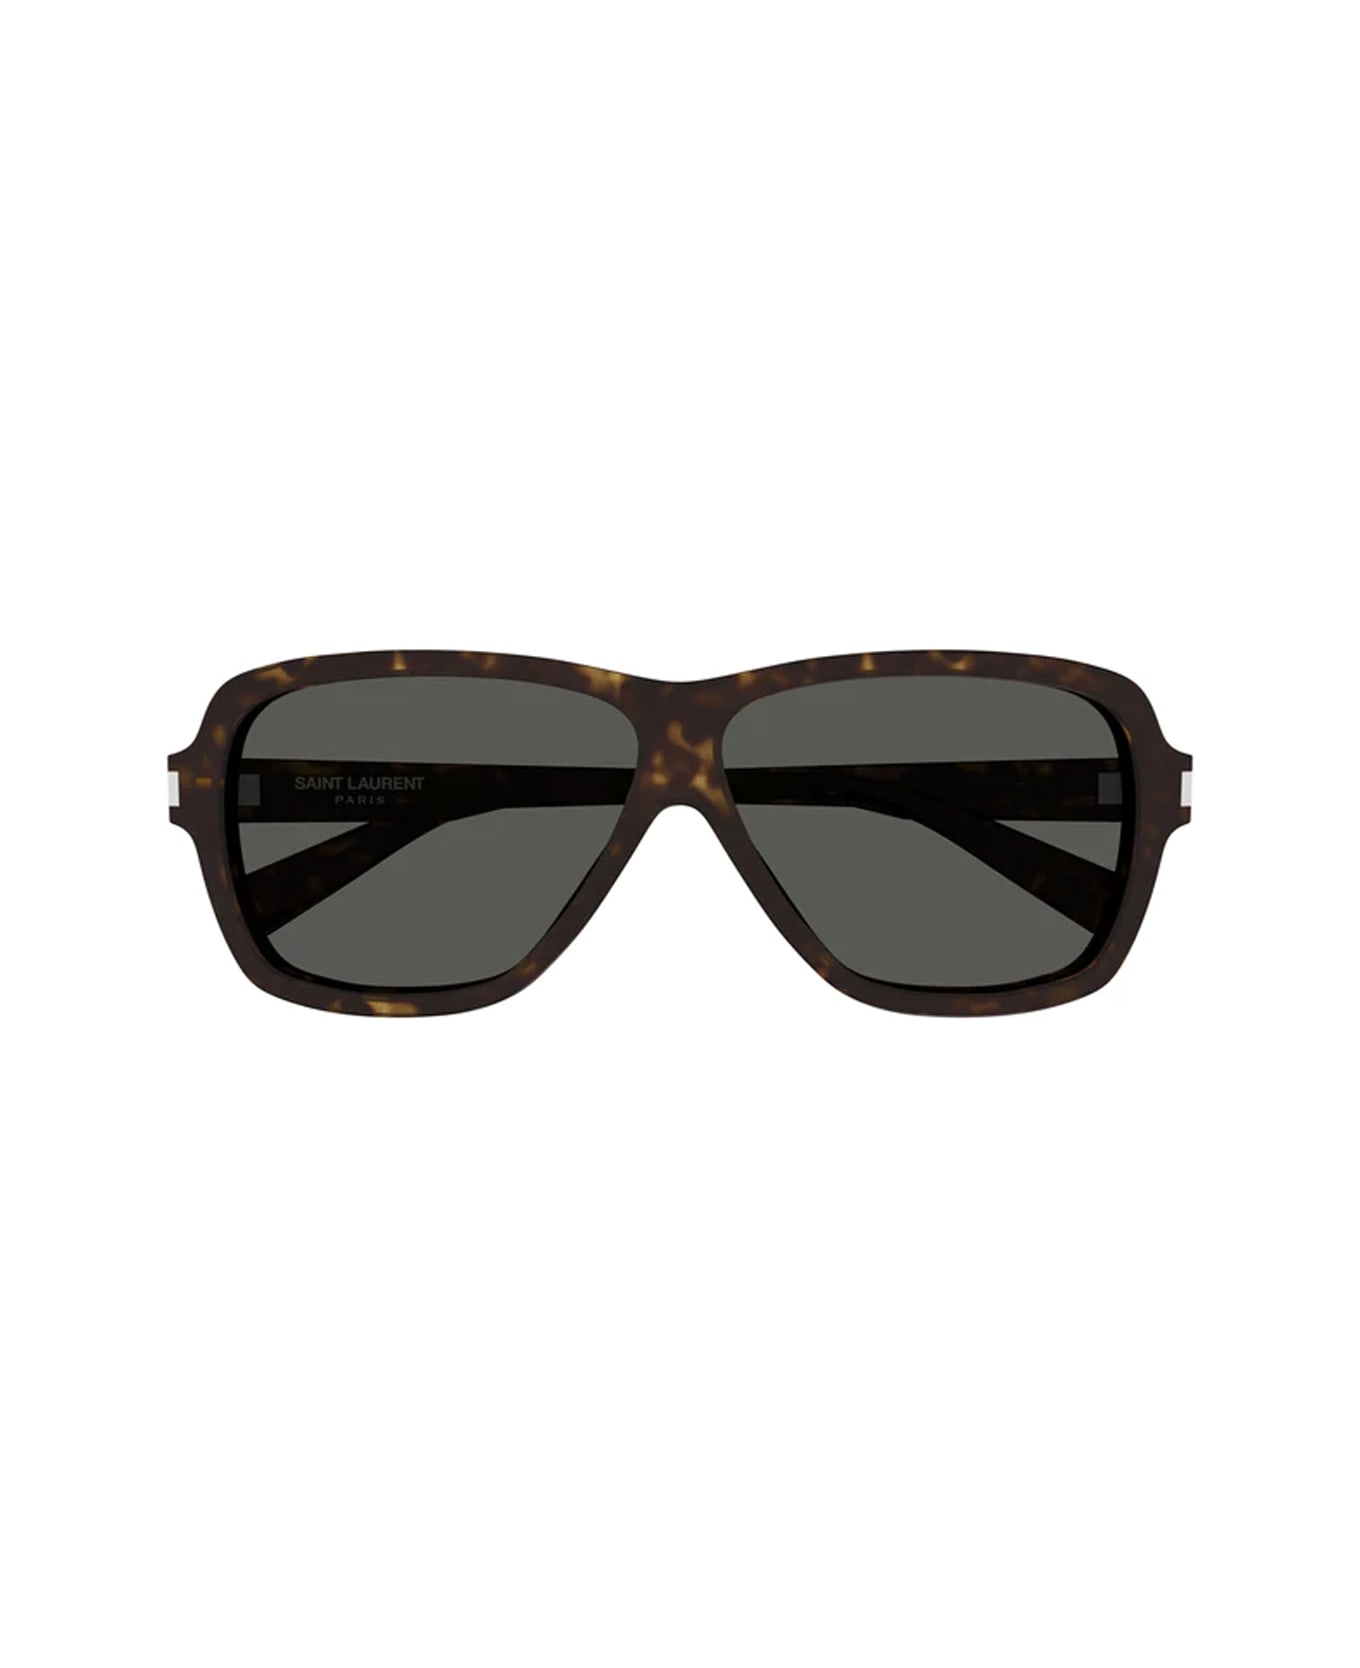 Saint Laurent Eyewear Sl 609 Carolyn 002 Sunglasses - Marrone